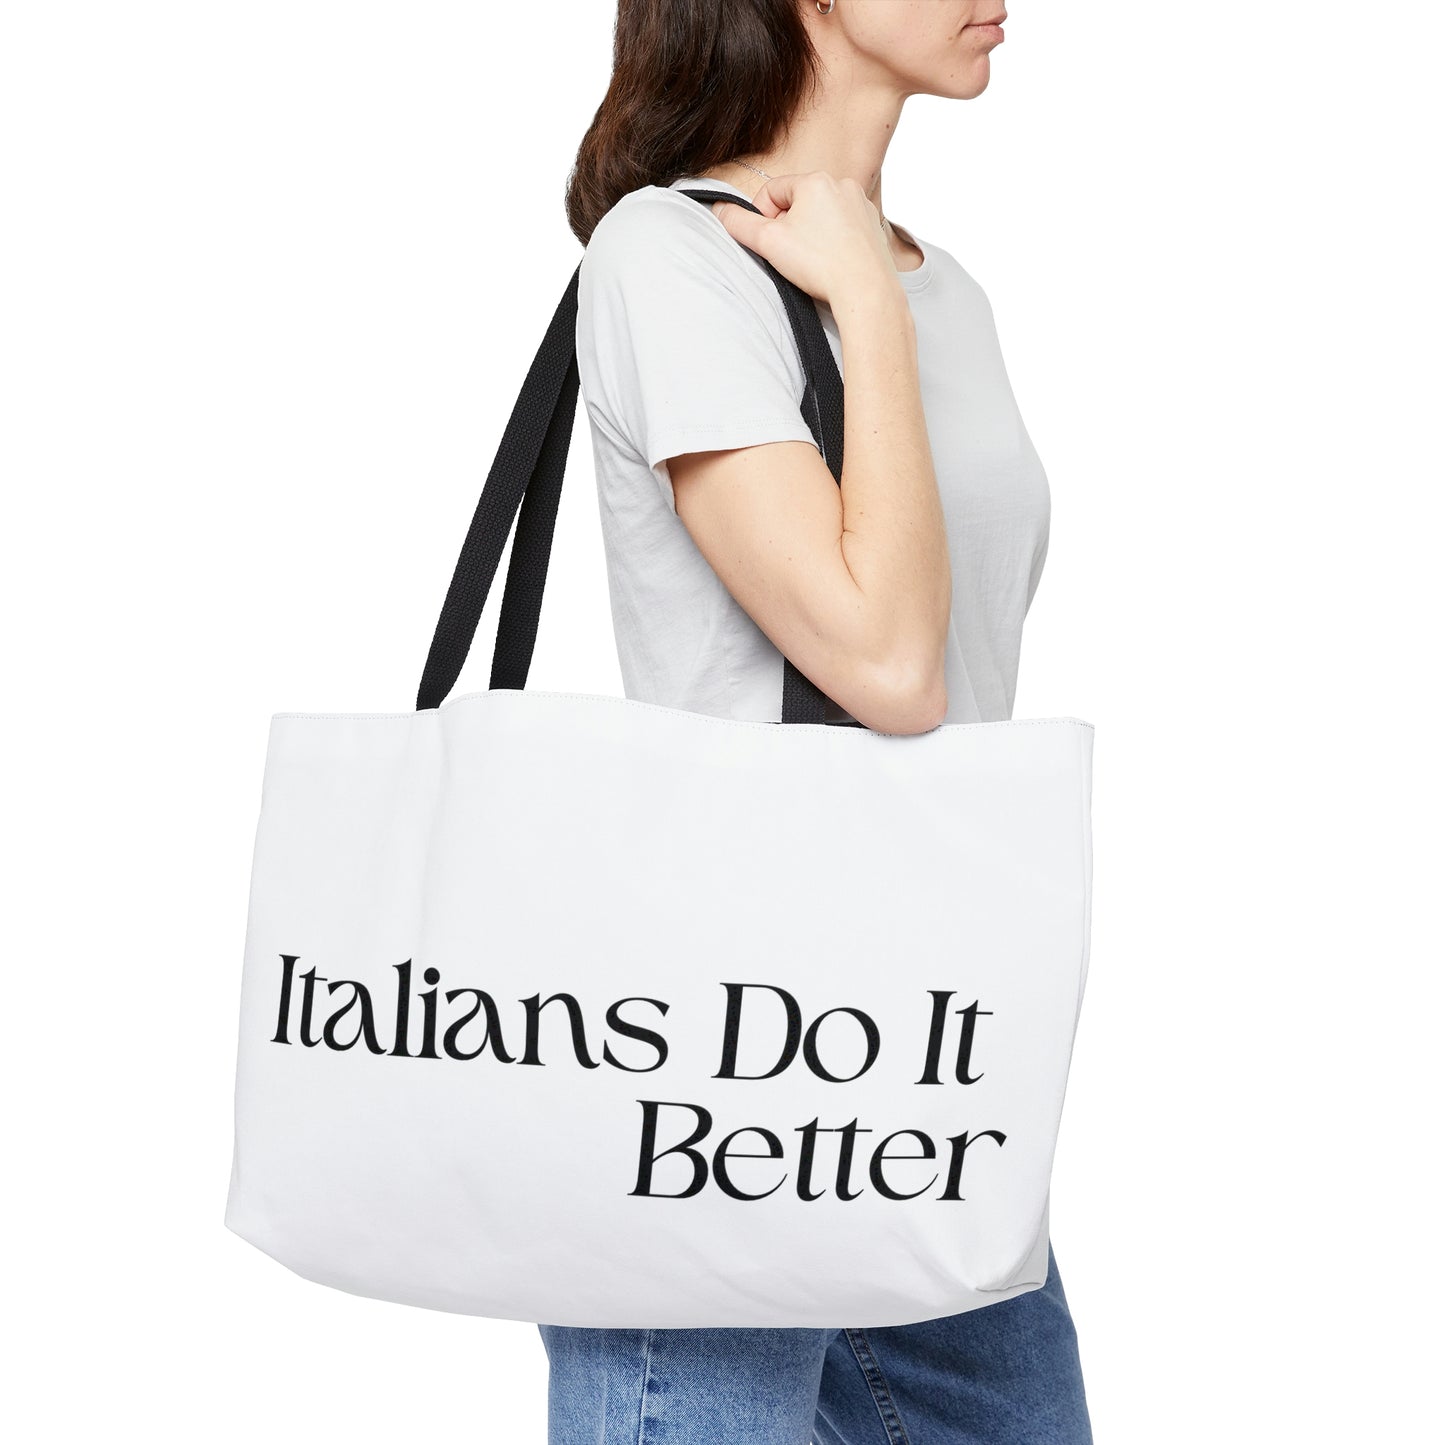 Italians Do It Better - Weekender Tote Bag